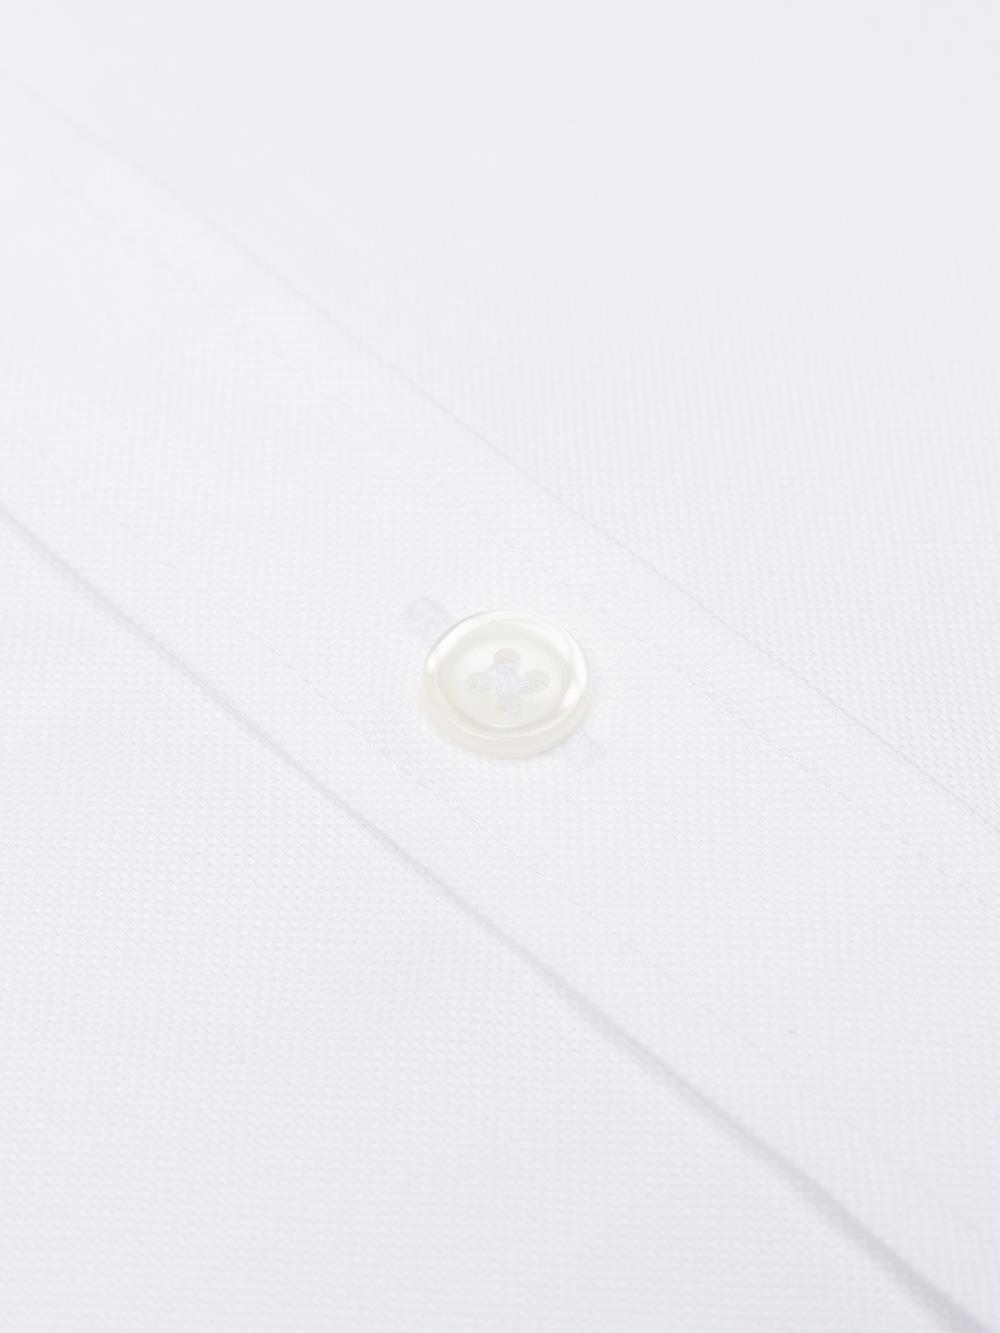 White oxford slim fit shirt - Button down collar